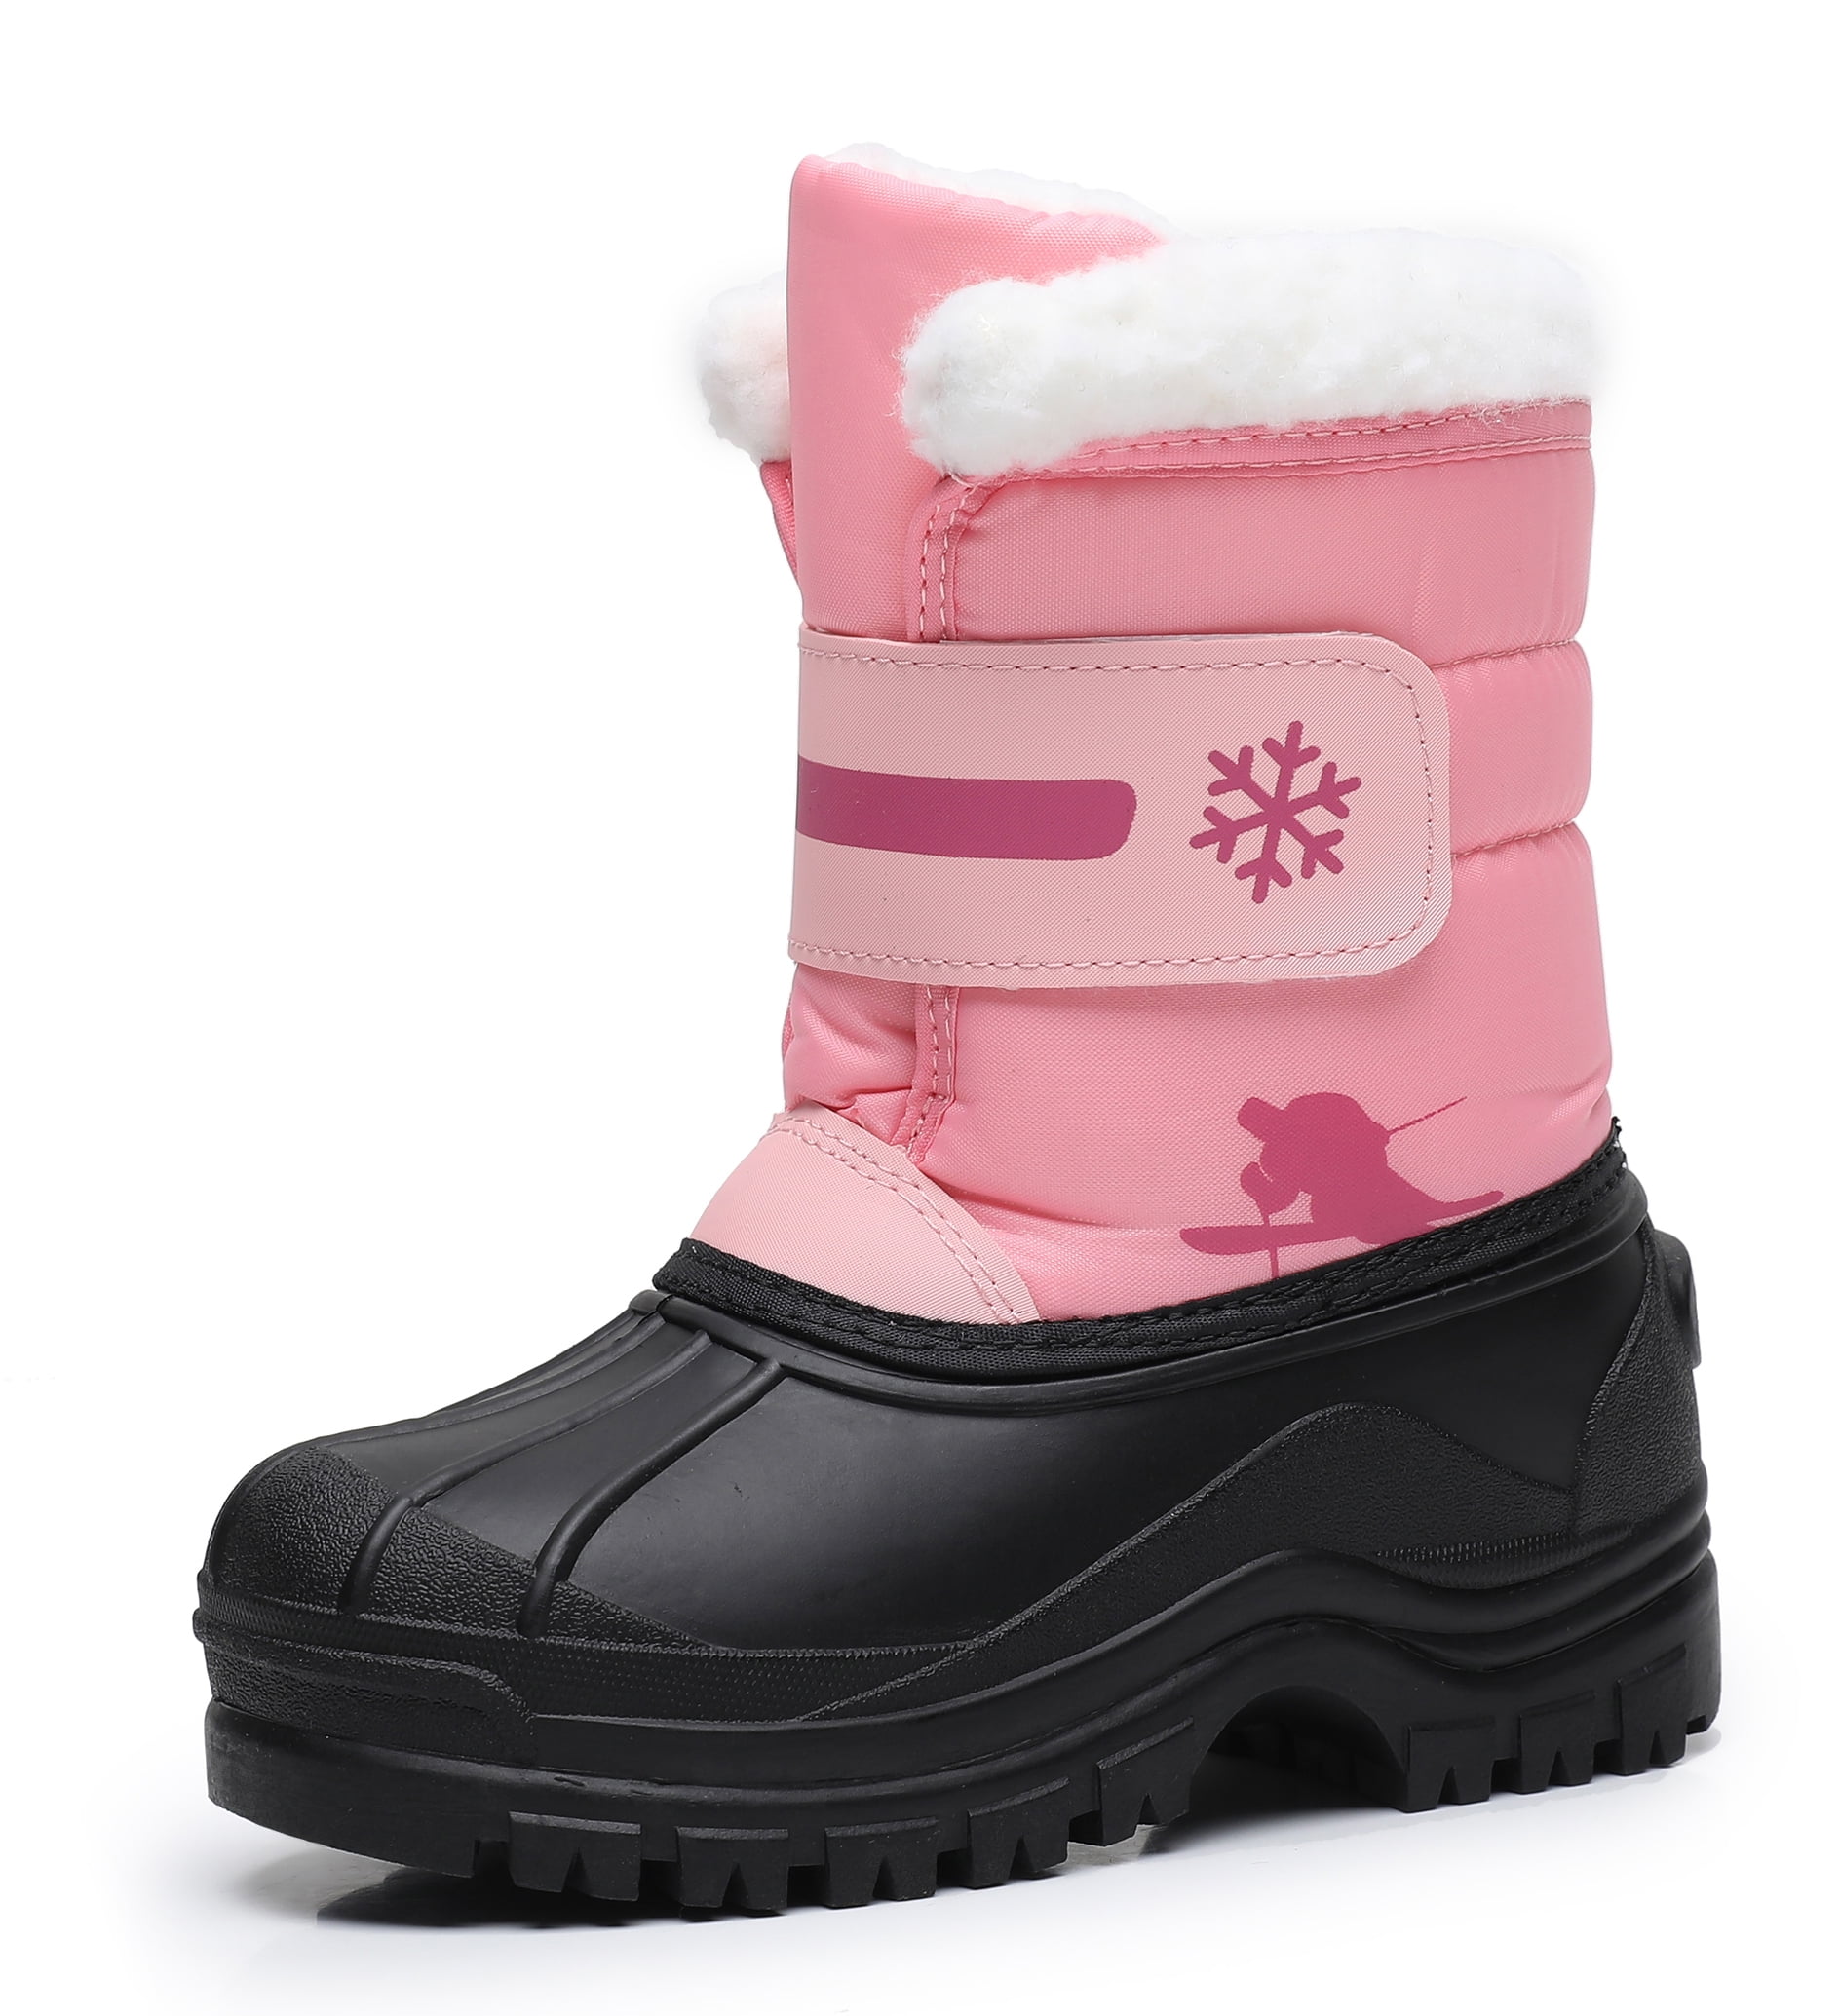 Apakowa Kids Boys Girls Winter Snow Boots Insulated Winter Boots ...